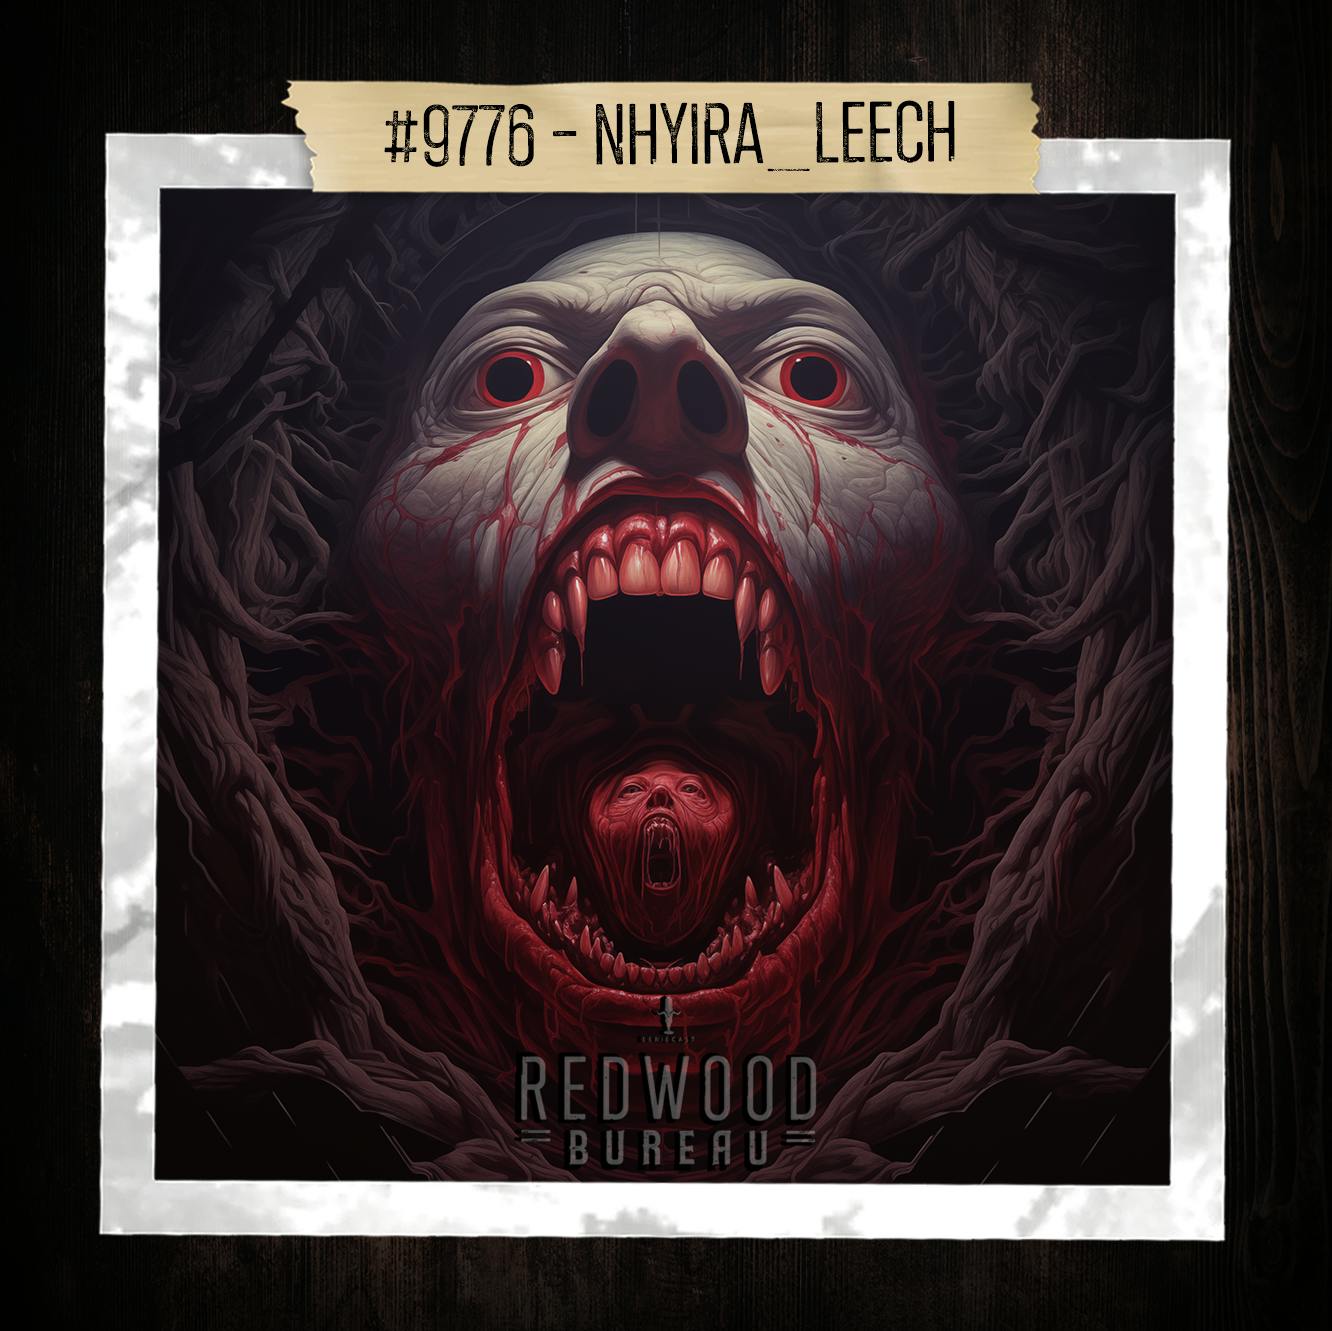 "NHYIRA_LEECH" - Redwood Bureau Phenomenon #9776